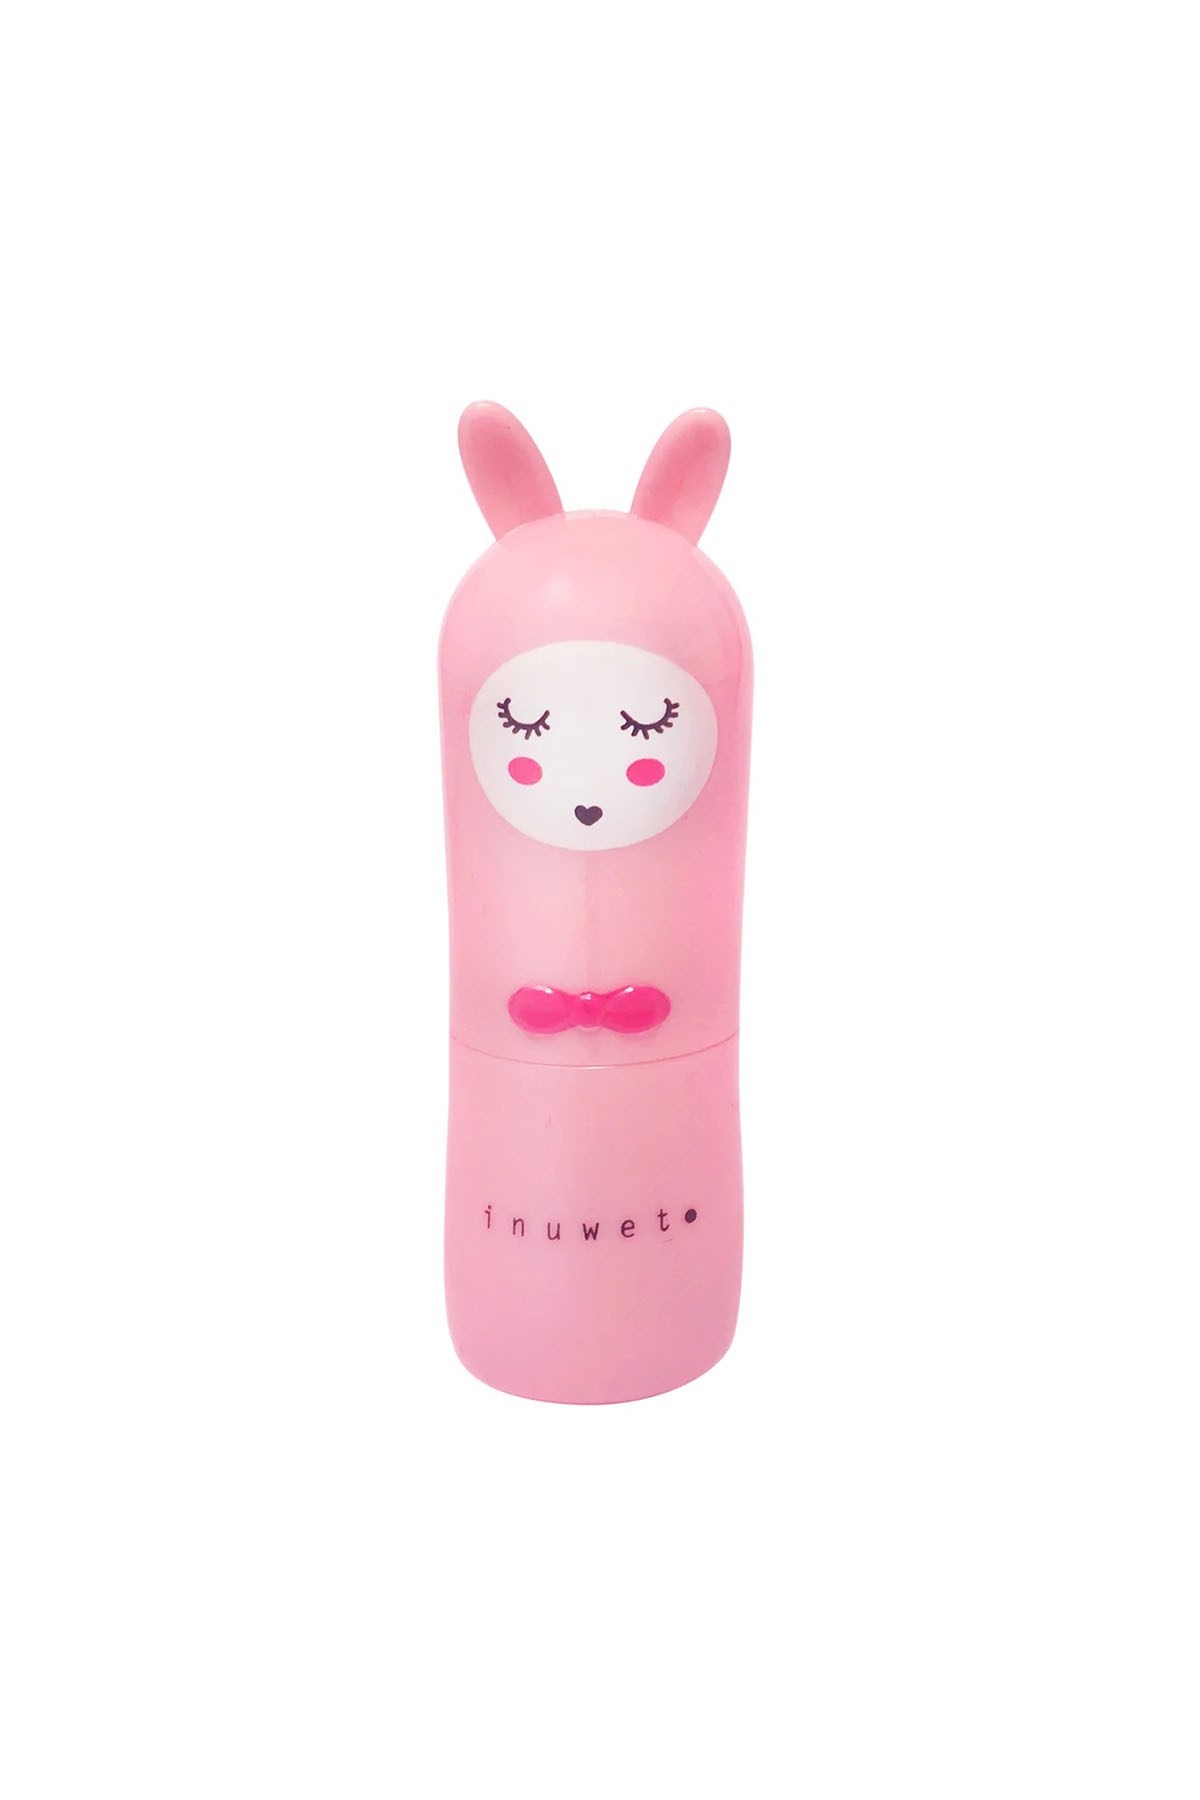 Inuwet Bunny Lip Balm Strawberry Pink